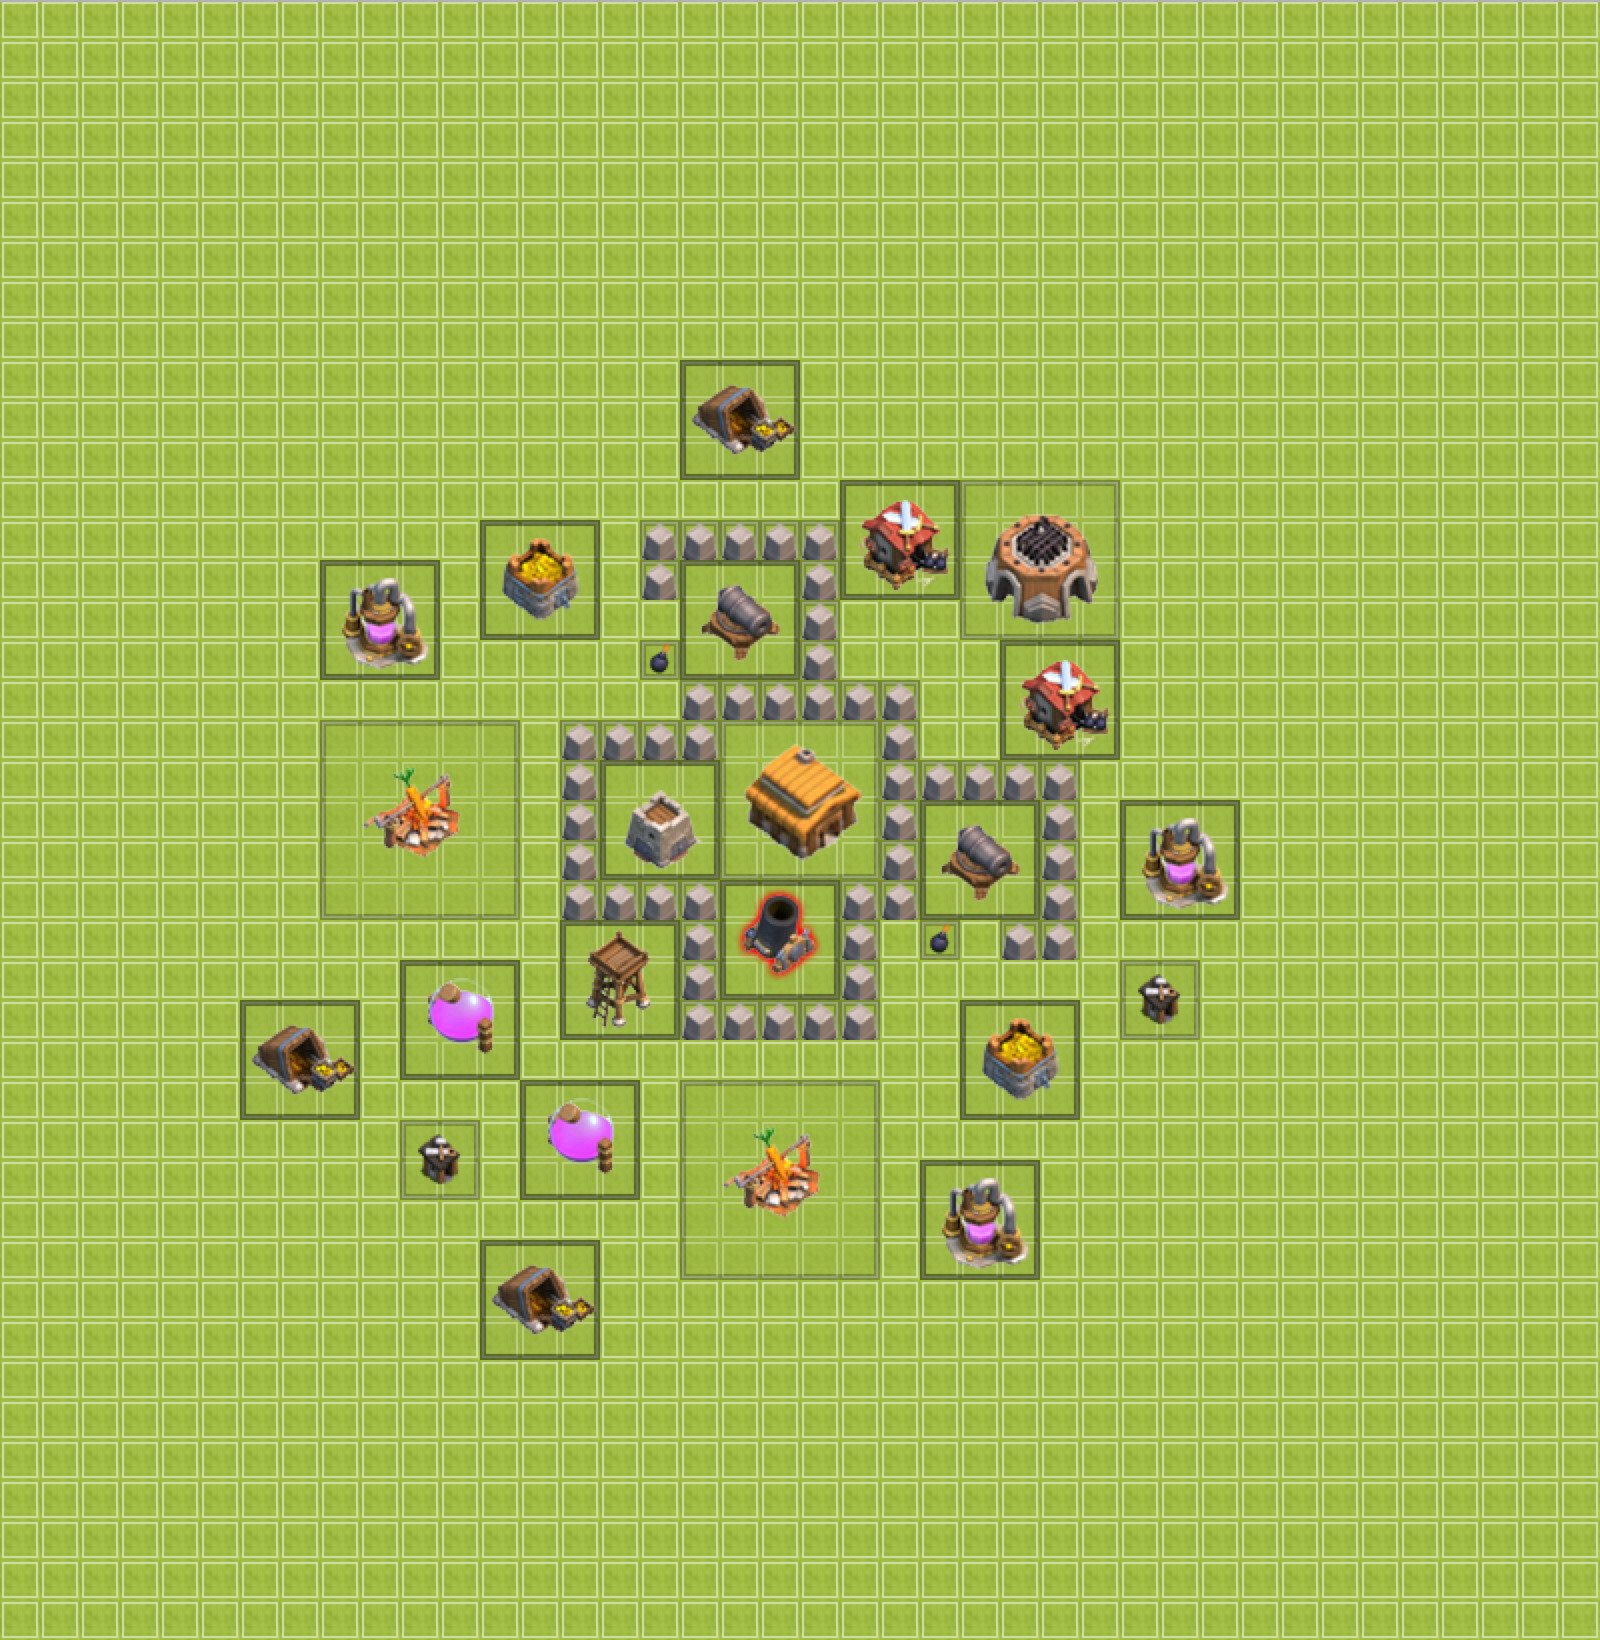 Defense (Trophy) Base TH3 - plan / layout / design - Clash of Clans, #4.